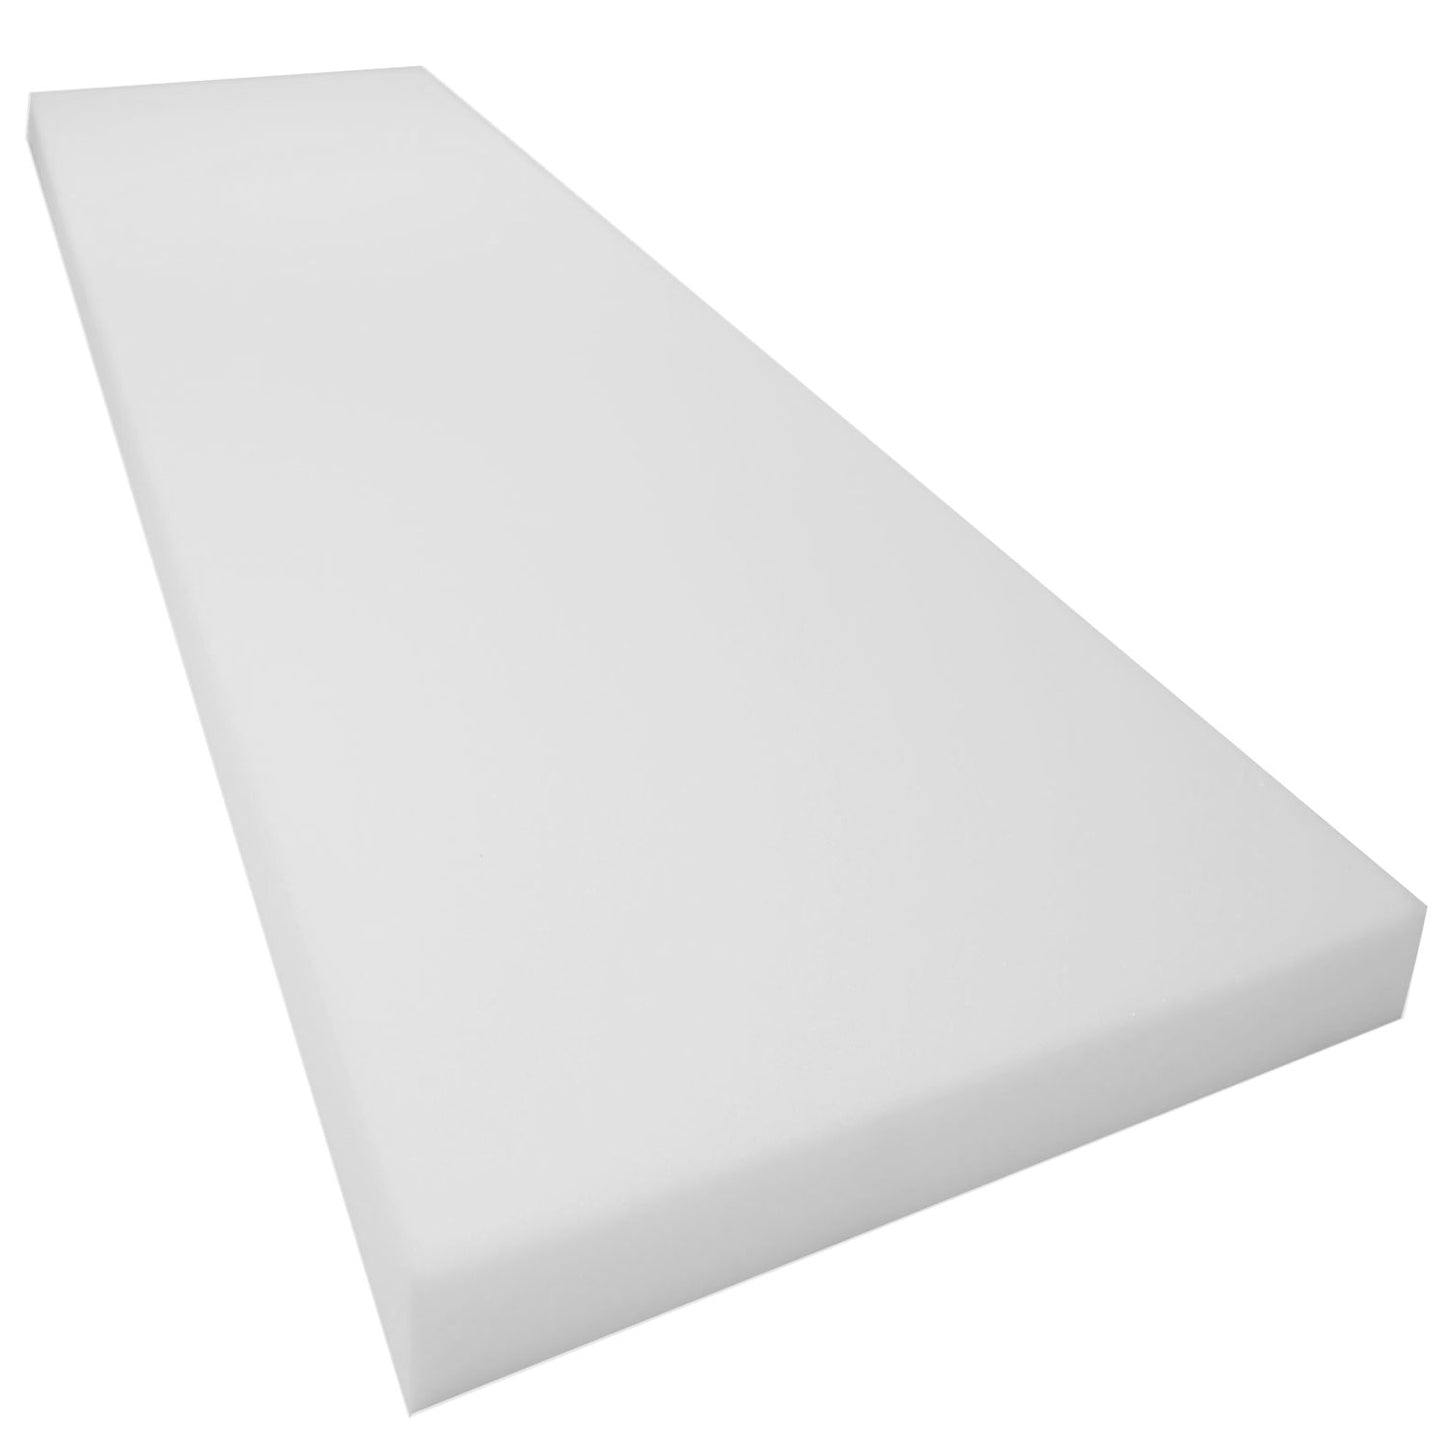 Mybecca 1" x 20"x 20" Upholstery Foam Cushion Medium Density (Seat Replacement, Upholstery Sheet, Foam Padding)